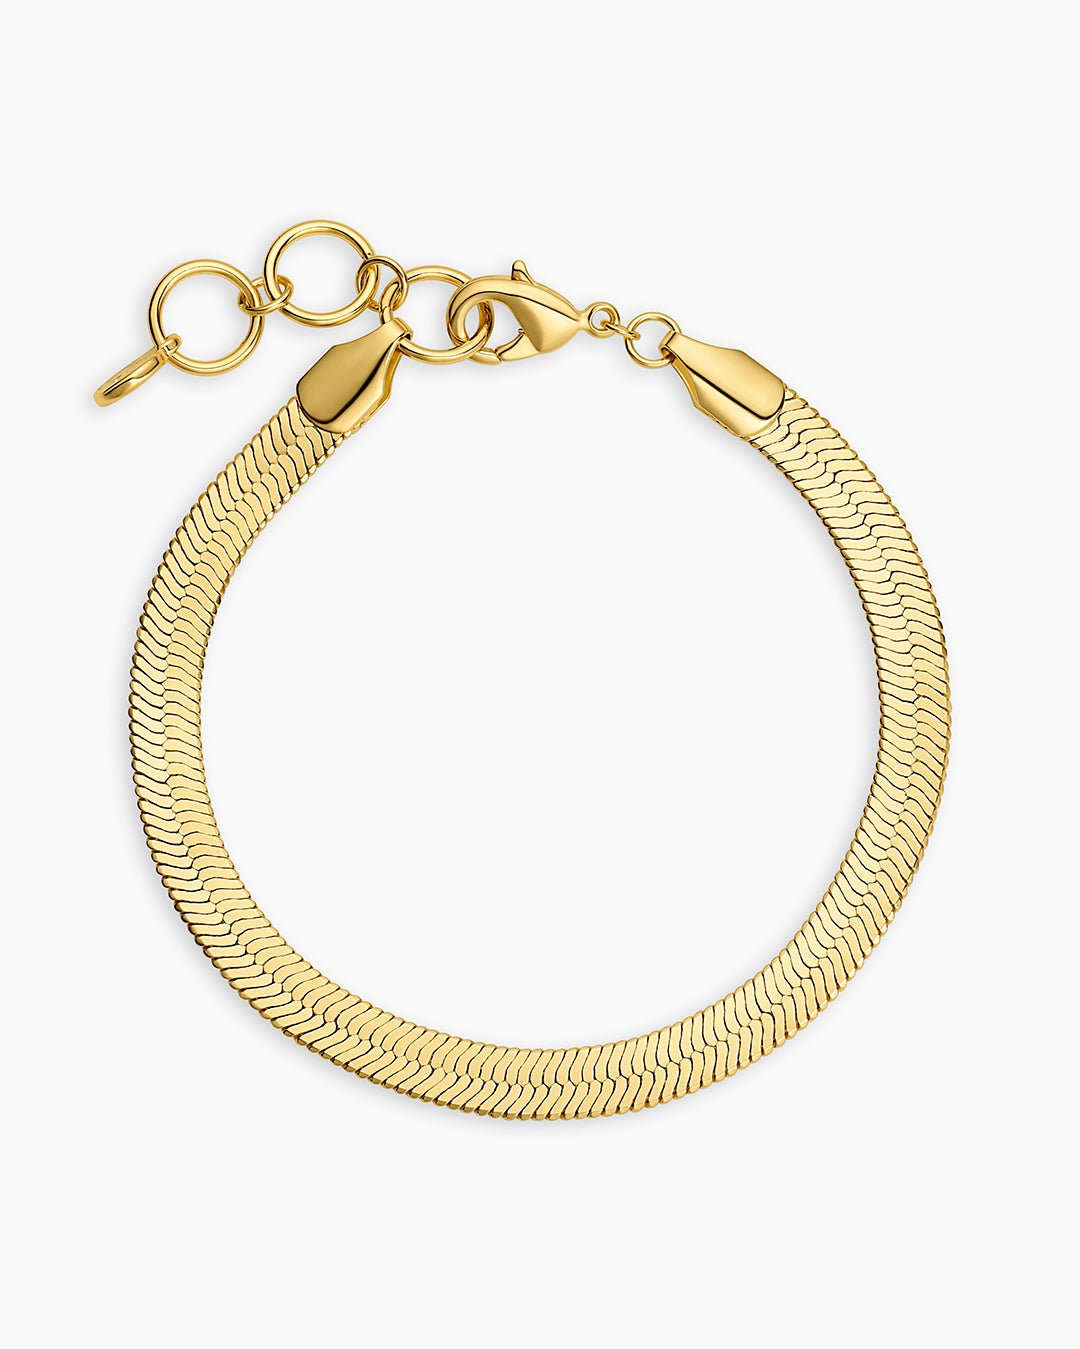 Brass Chain Bracelet 6 inch Wide (Small)